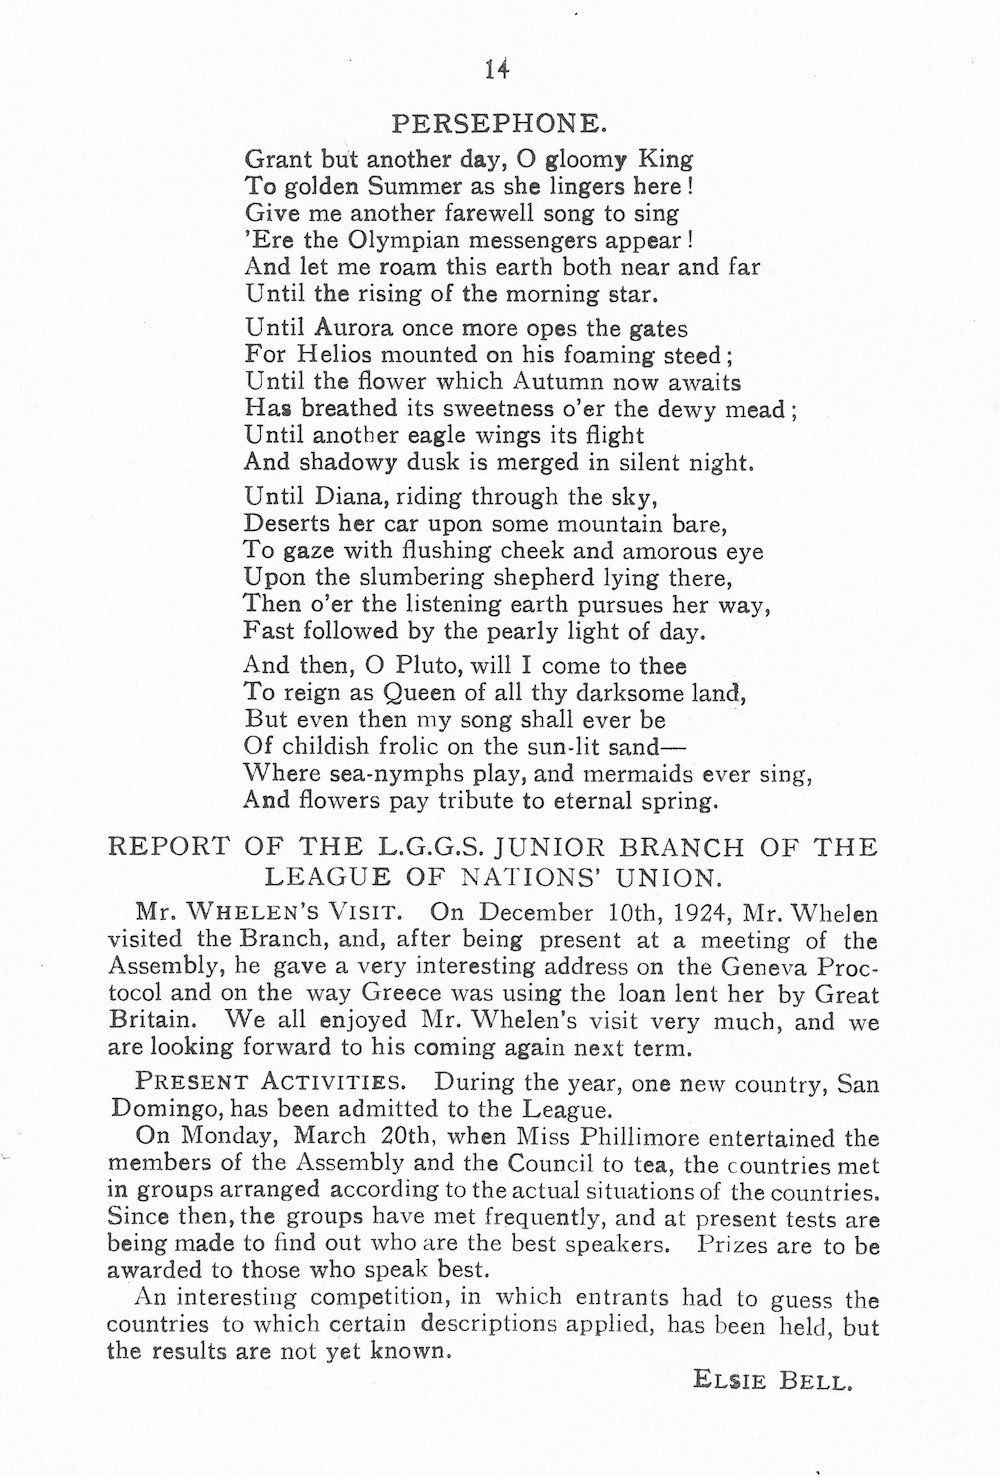 Report of LGGS Junior Branch of LNU, LGGS Chronicle, 1925 Courtesy of Lancaste Girls’ Grammar School "